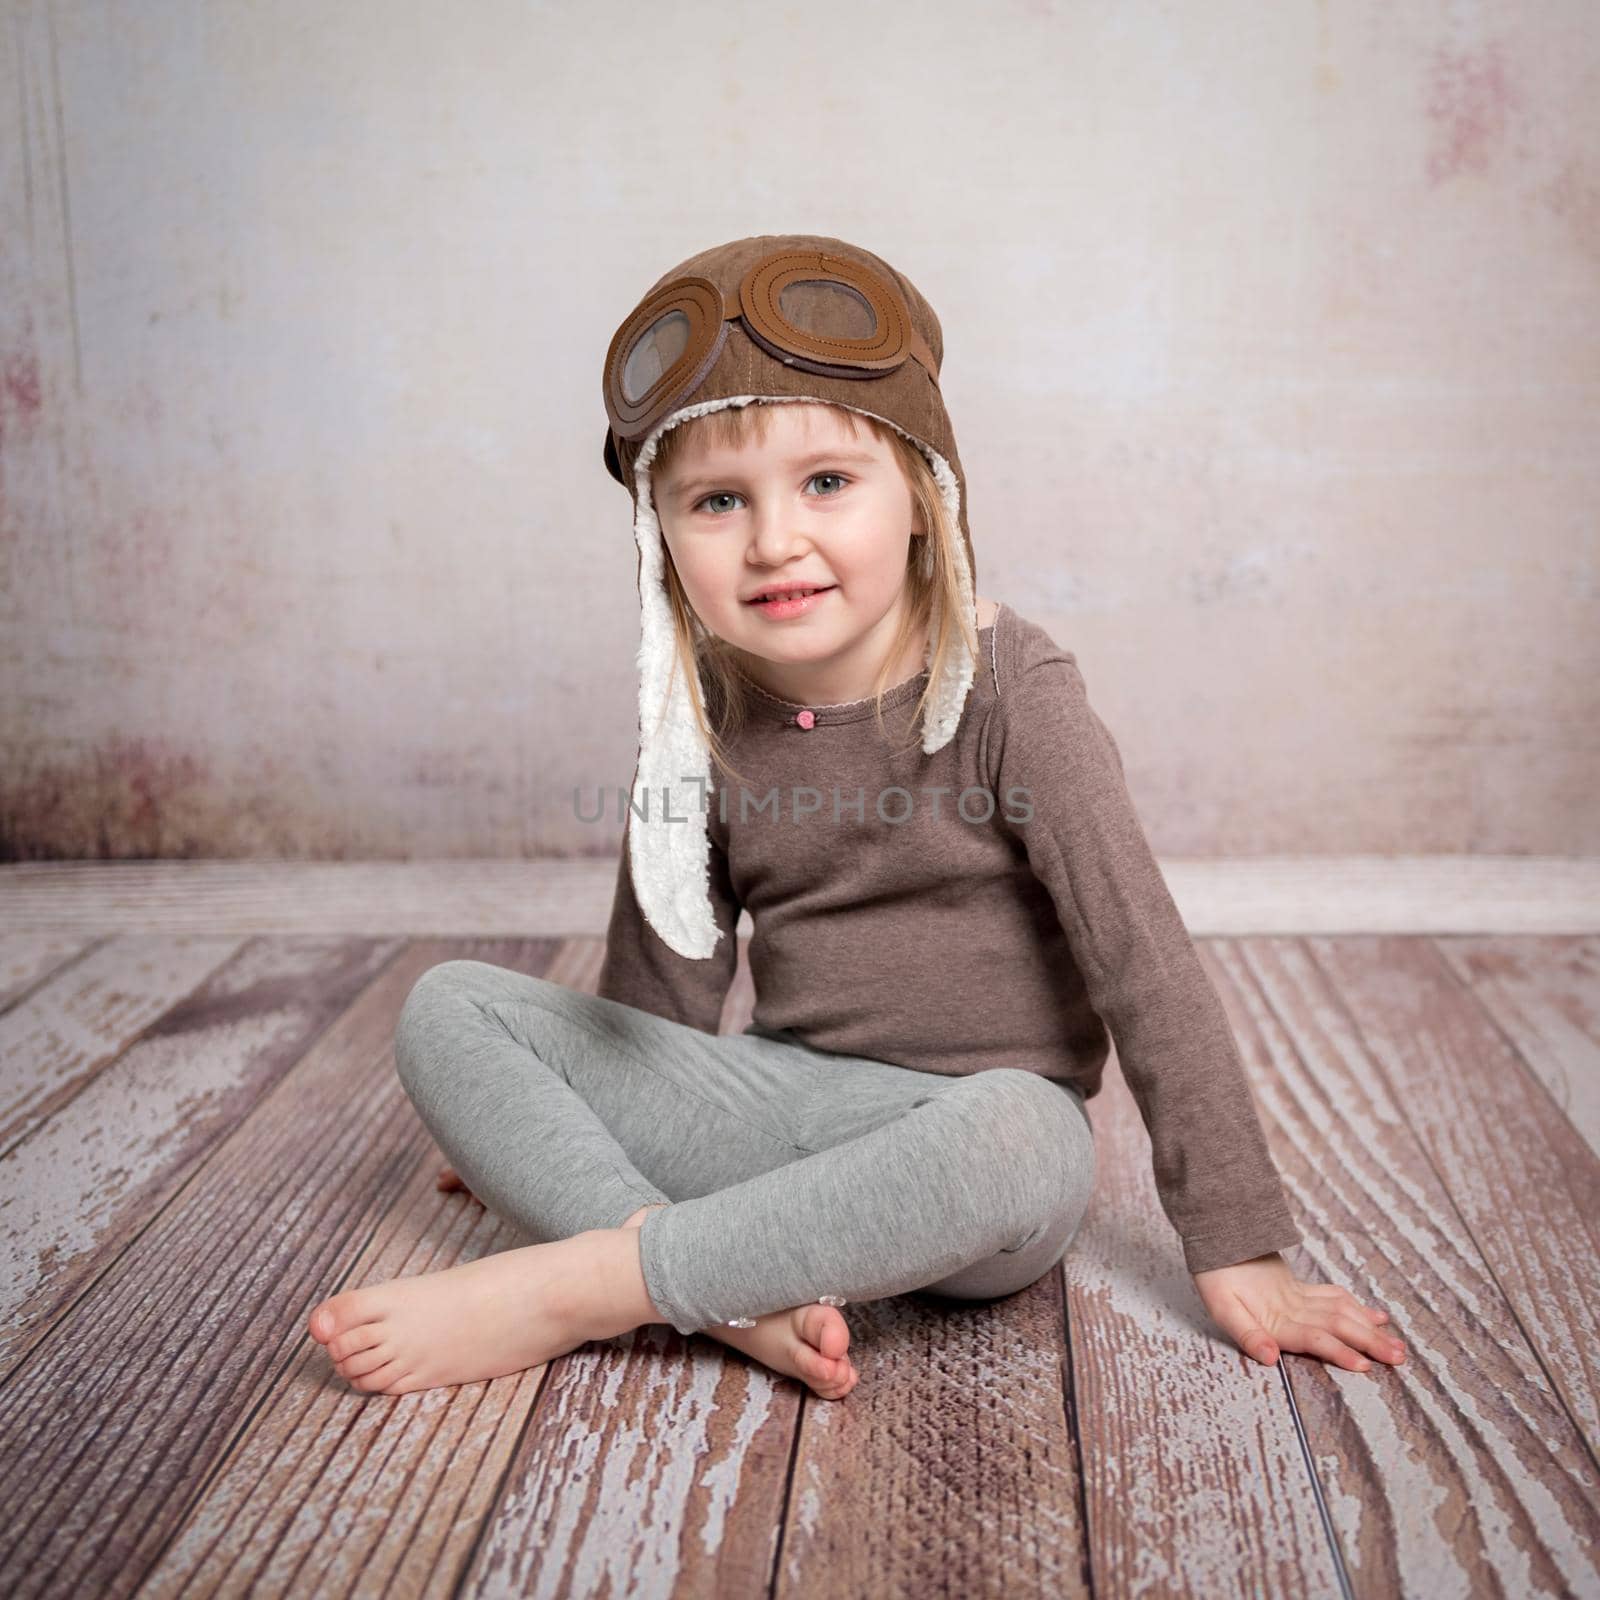 cute little girl in airman hat sitting on wooden floor